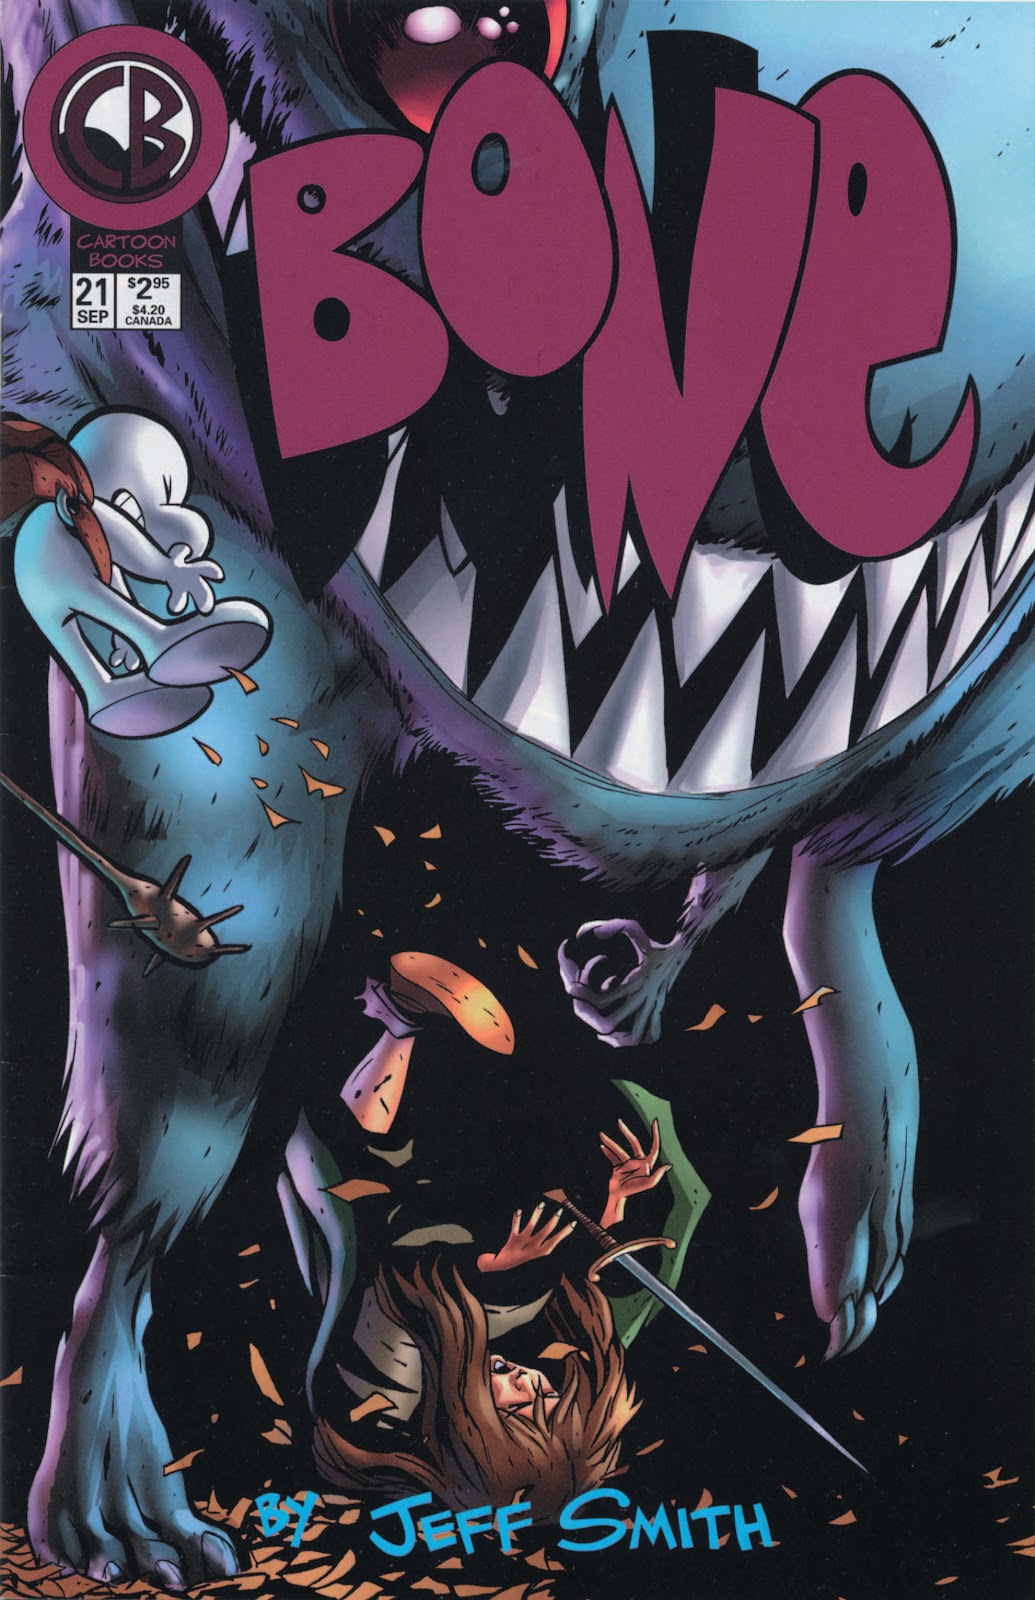 Bone (1991) issue 21 - Page 1